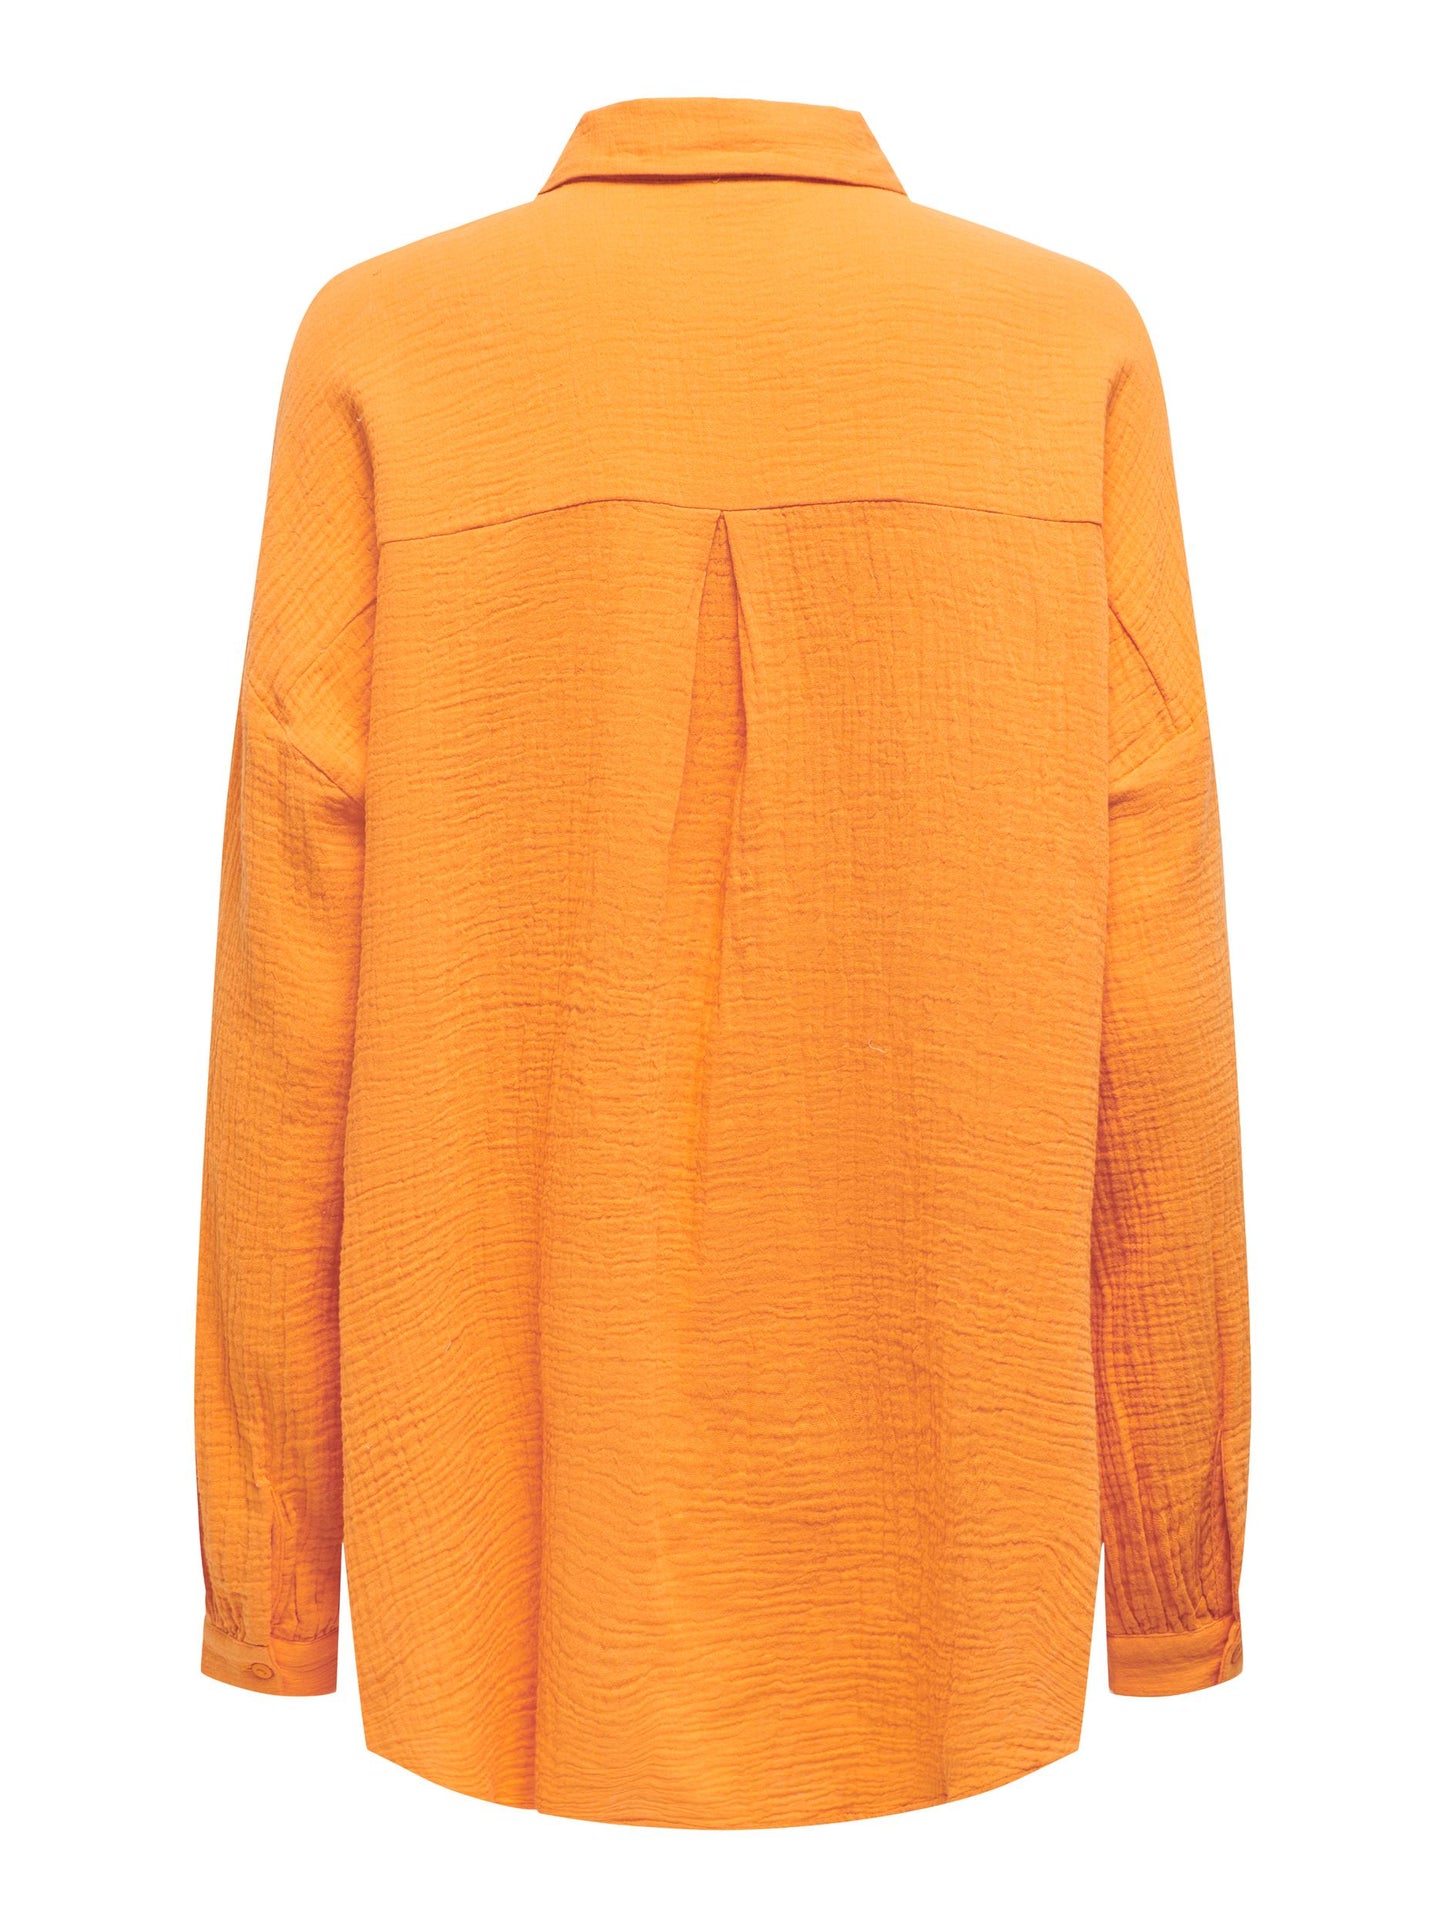 Orange cheesecloth shirt - 100% Cotton